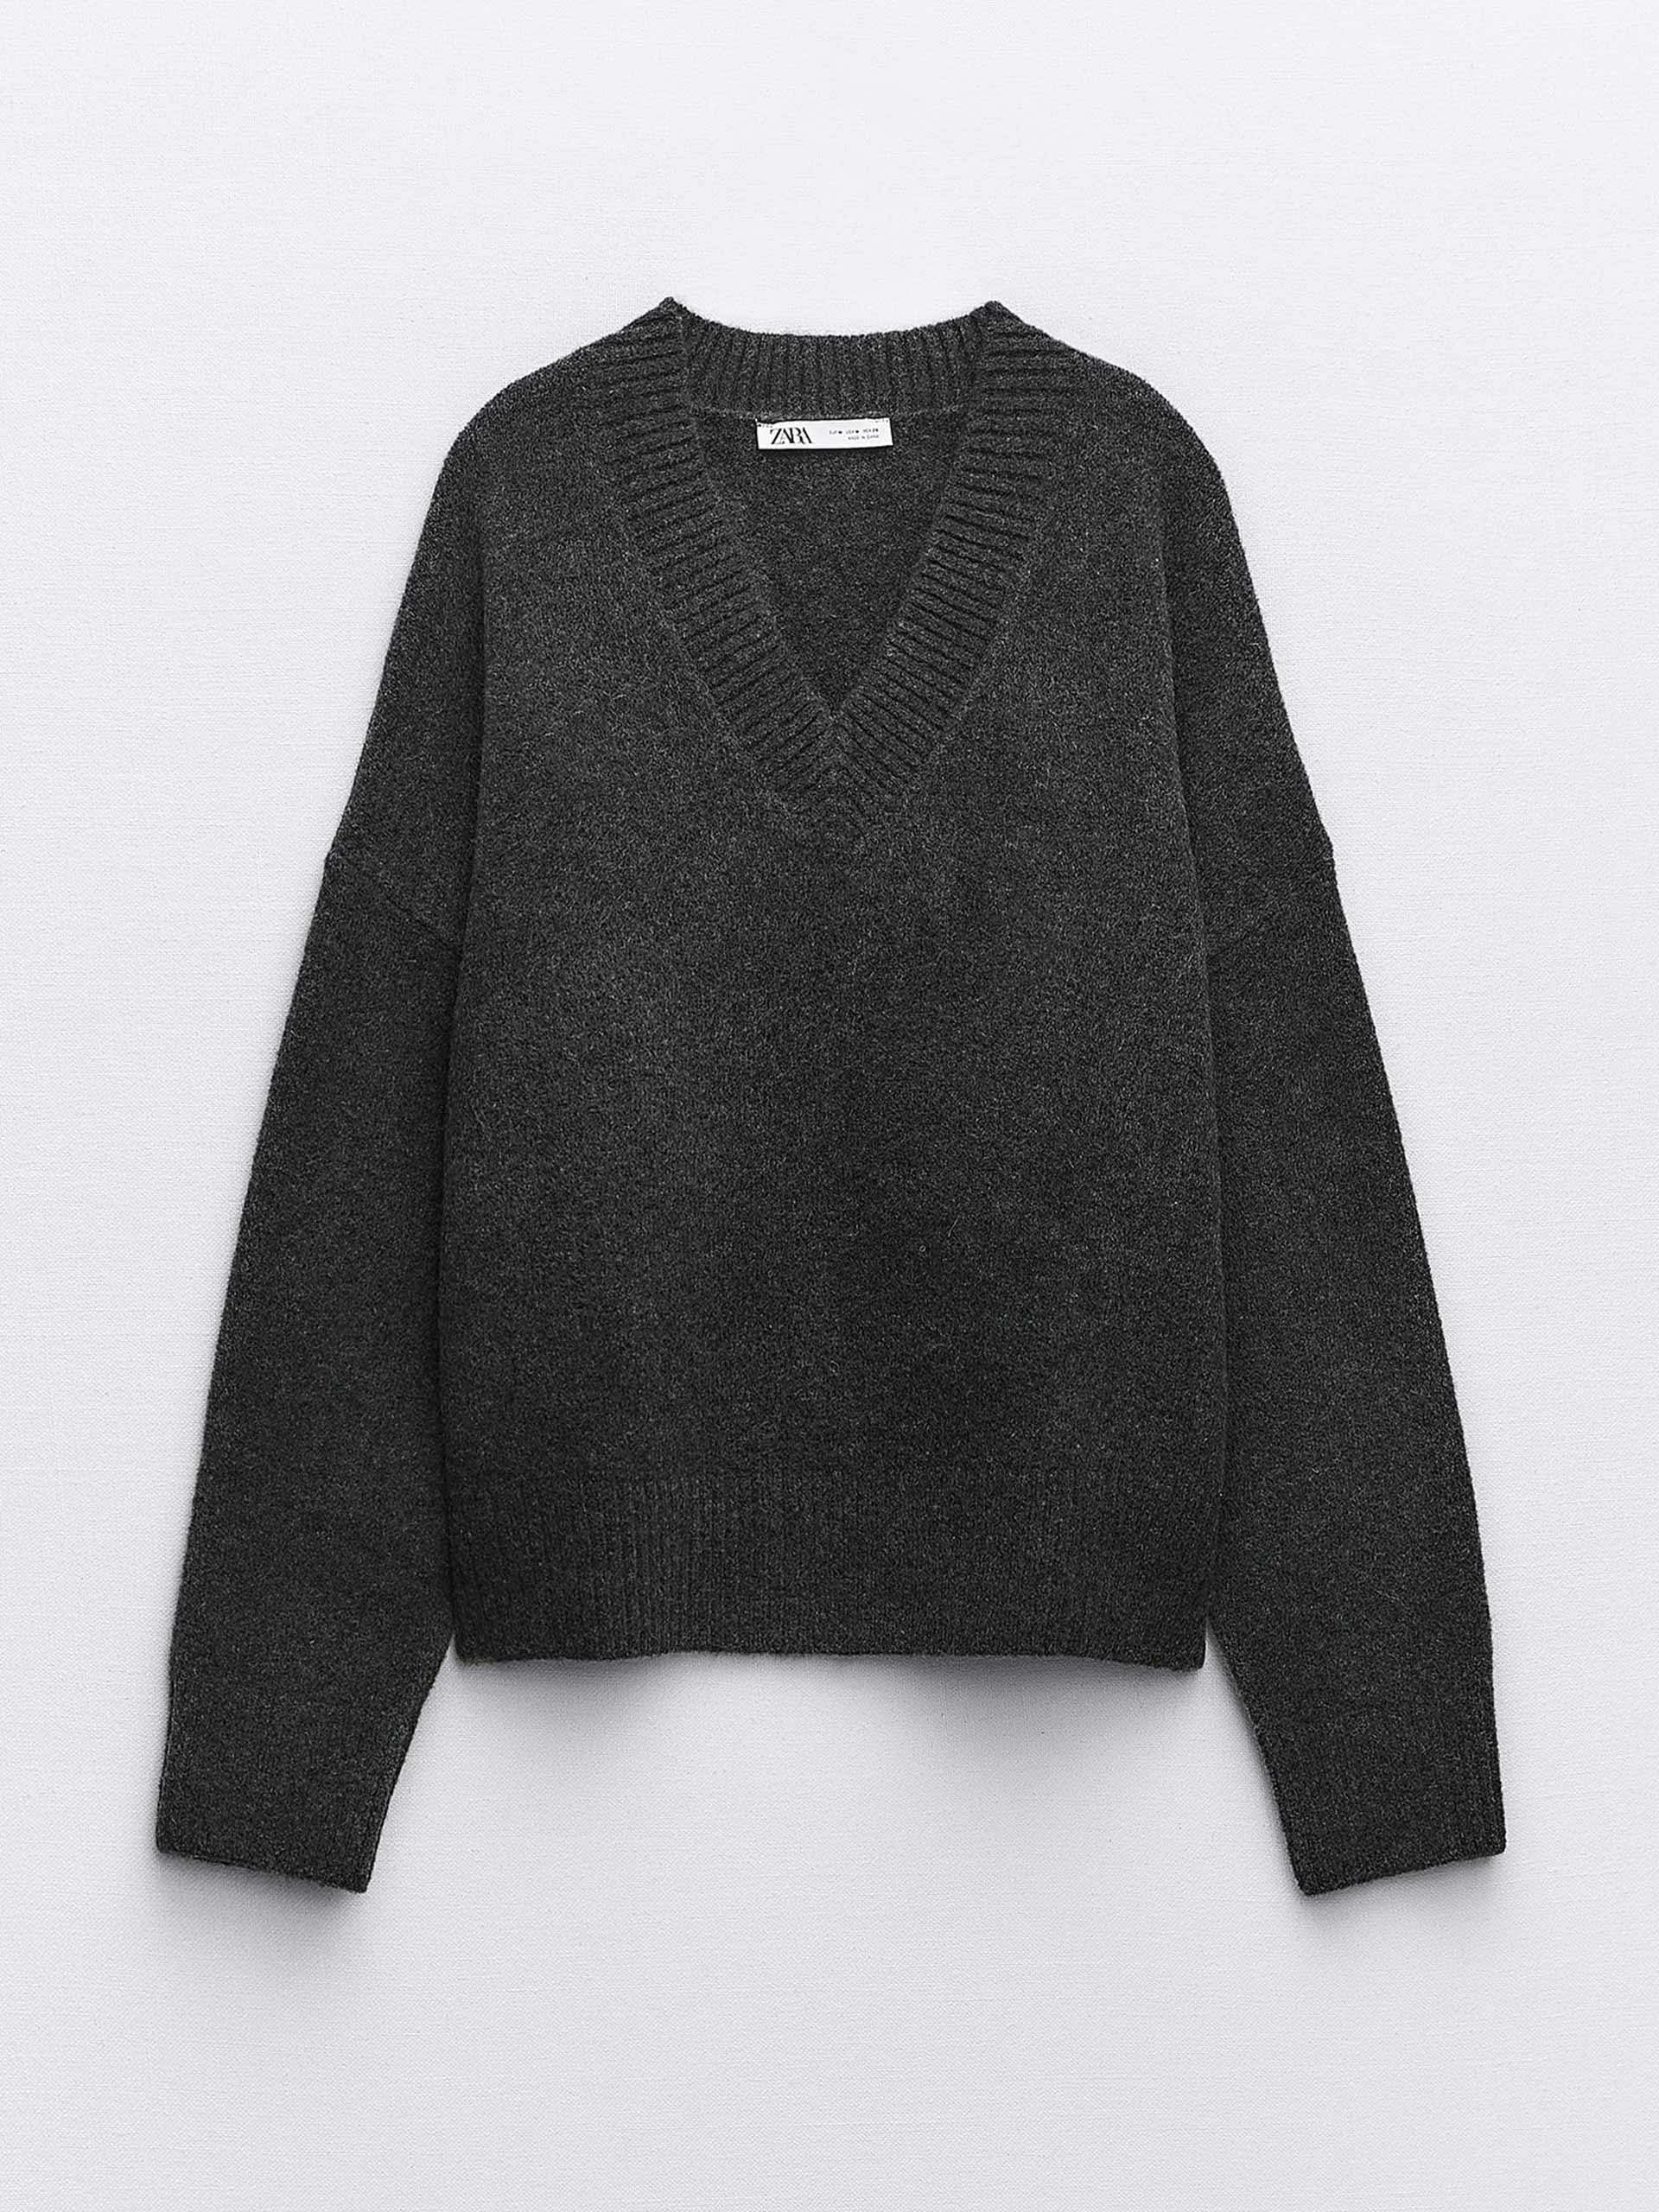 Soft knit grey sweater